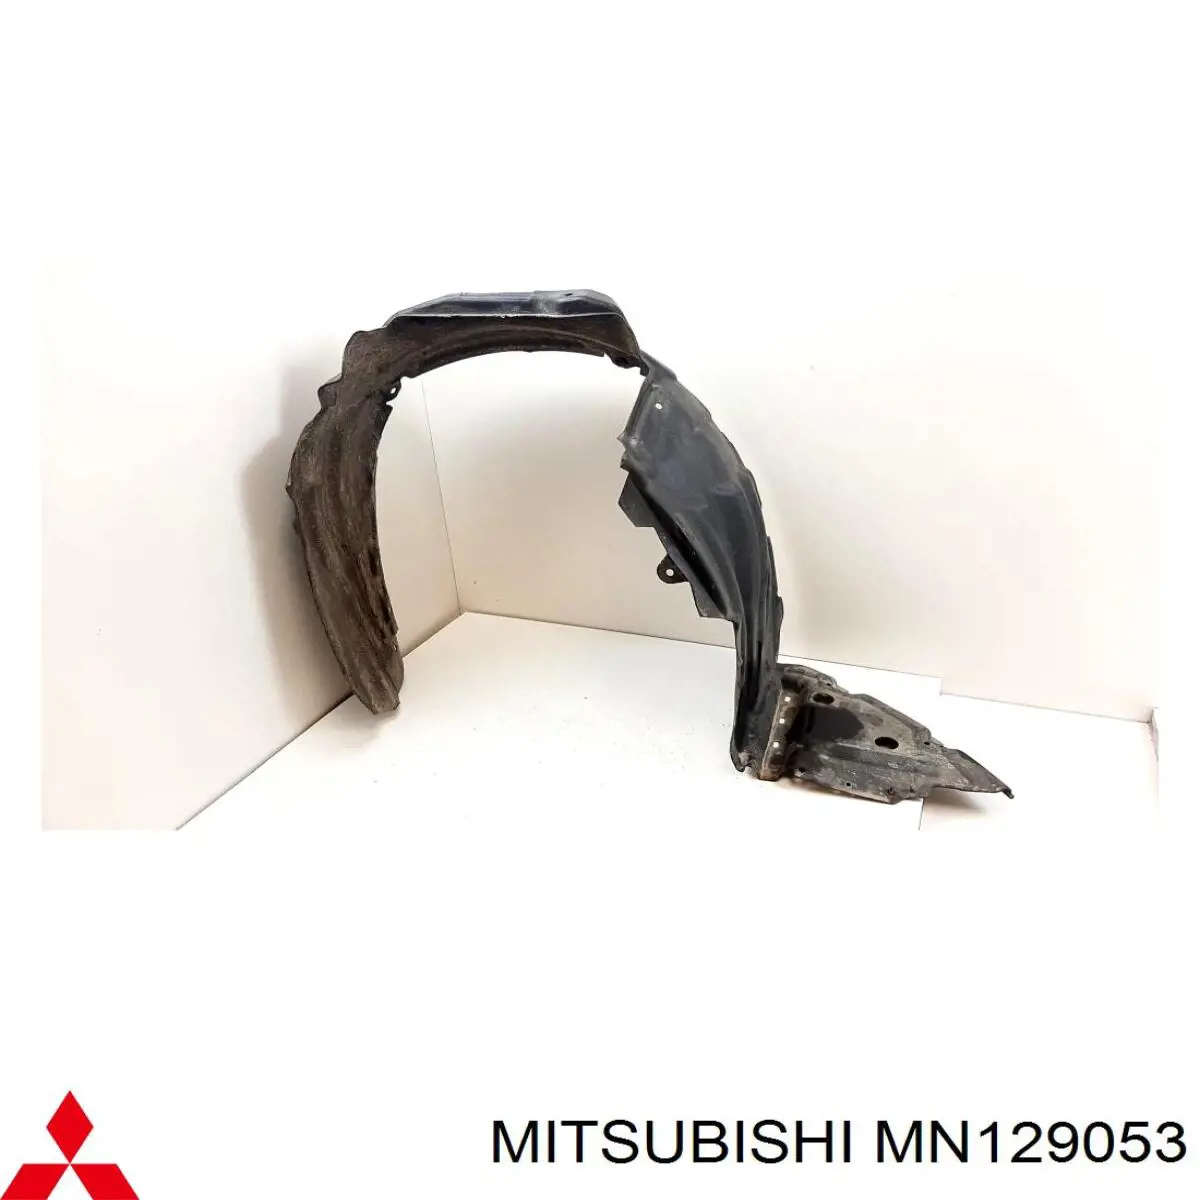 MN129053 Mitsubishi